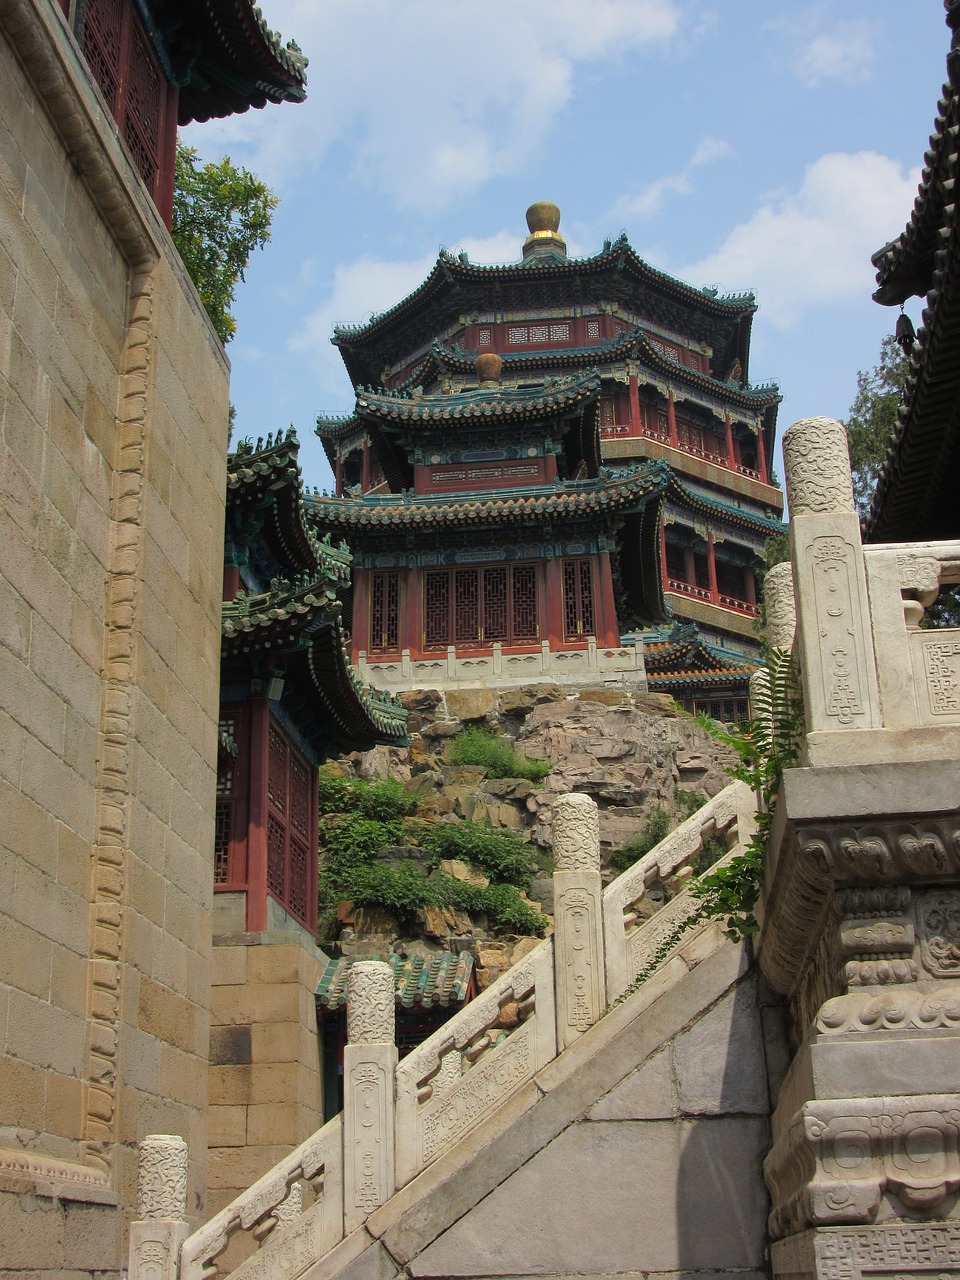 pekin summer palace pagoda free photo